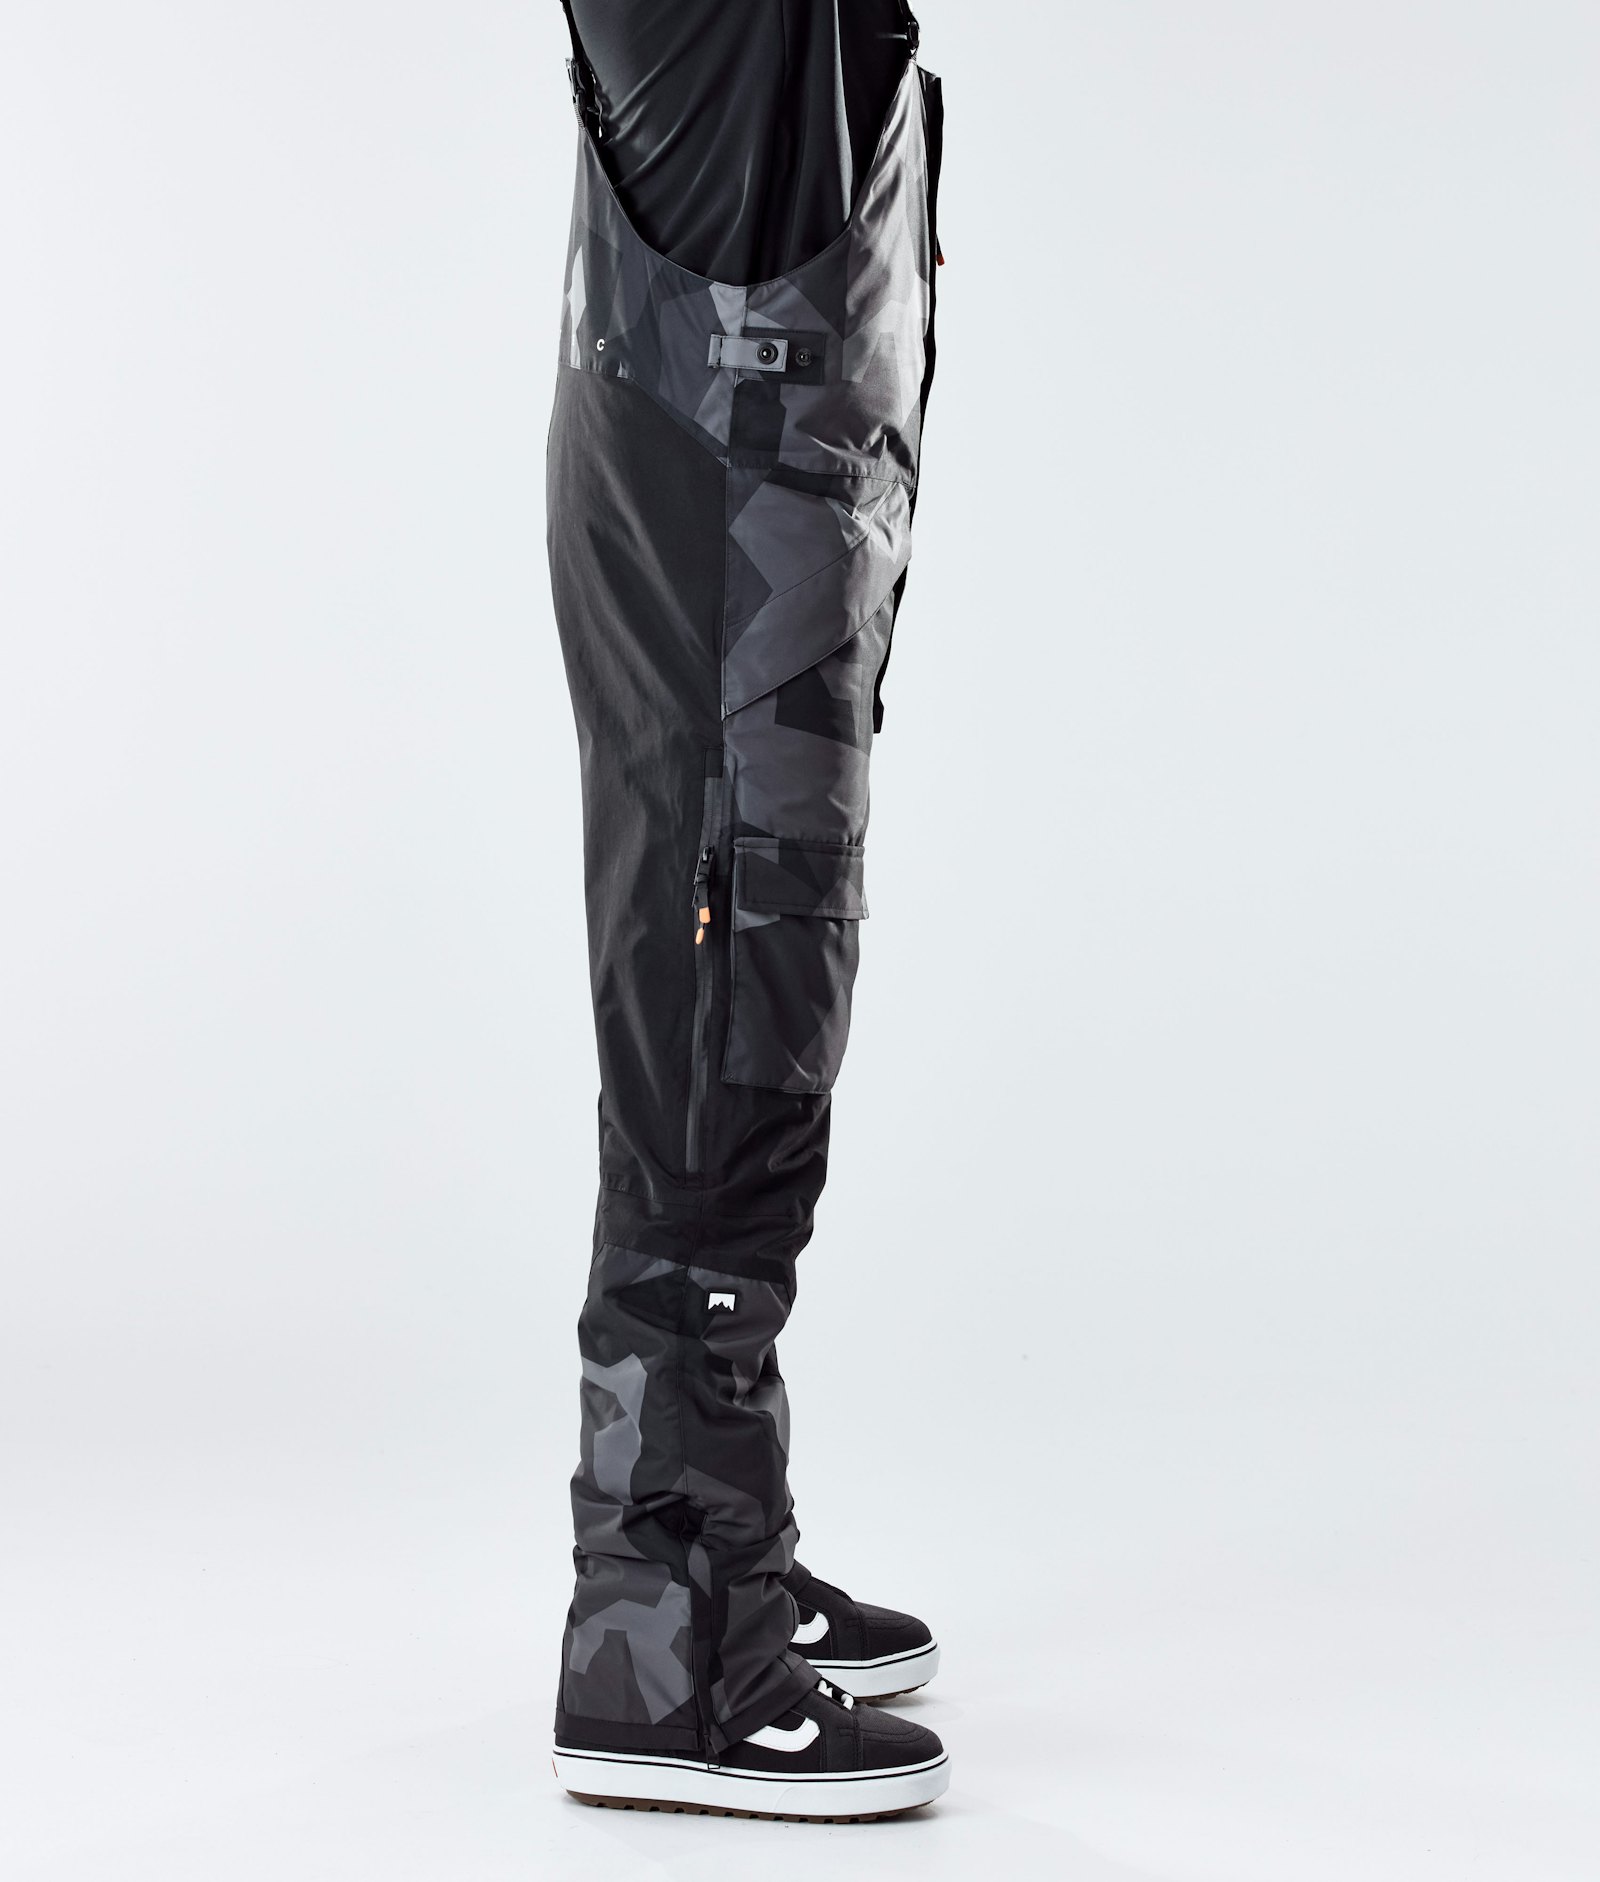 Fawk 2020 Pantalon de Snowboard Homme Night Camo/Black